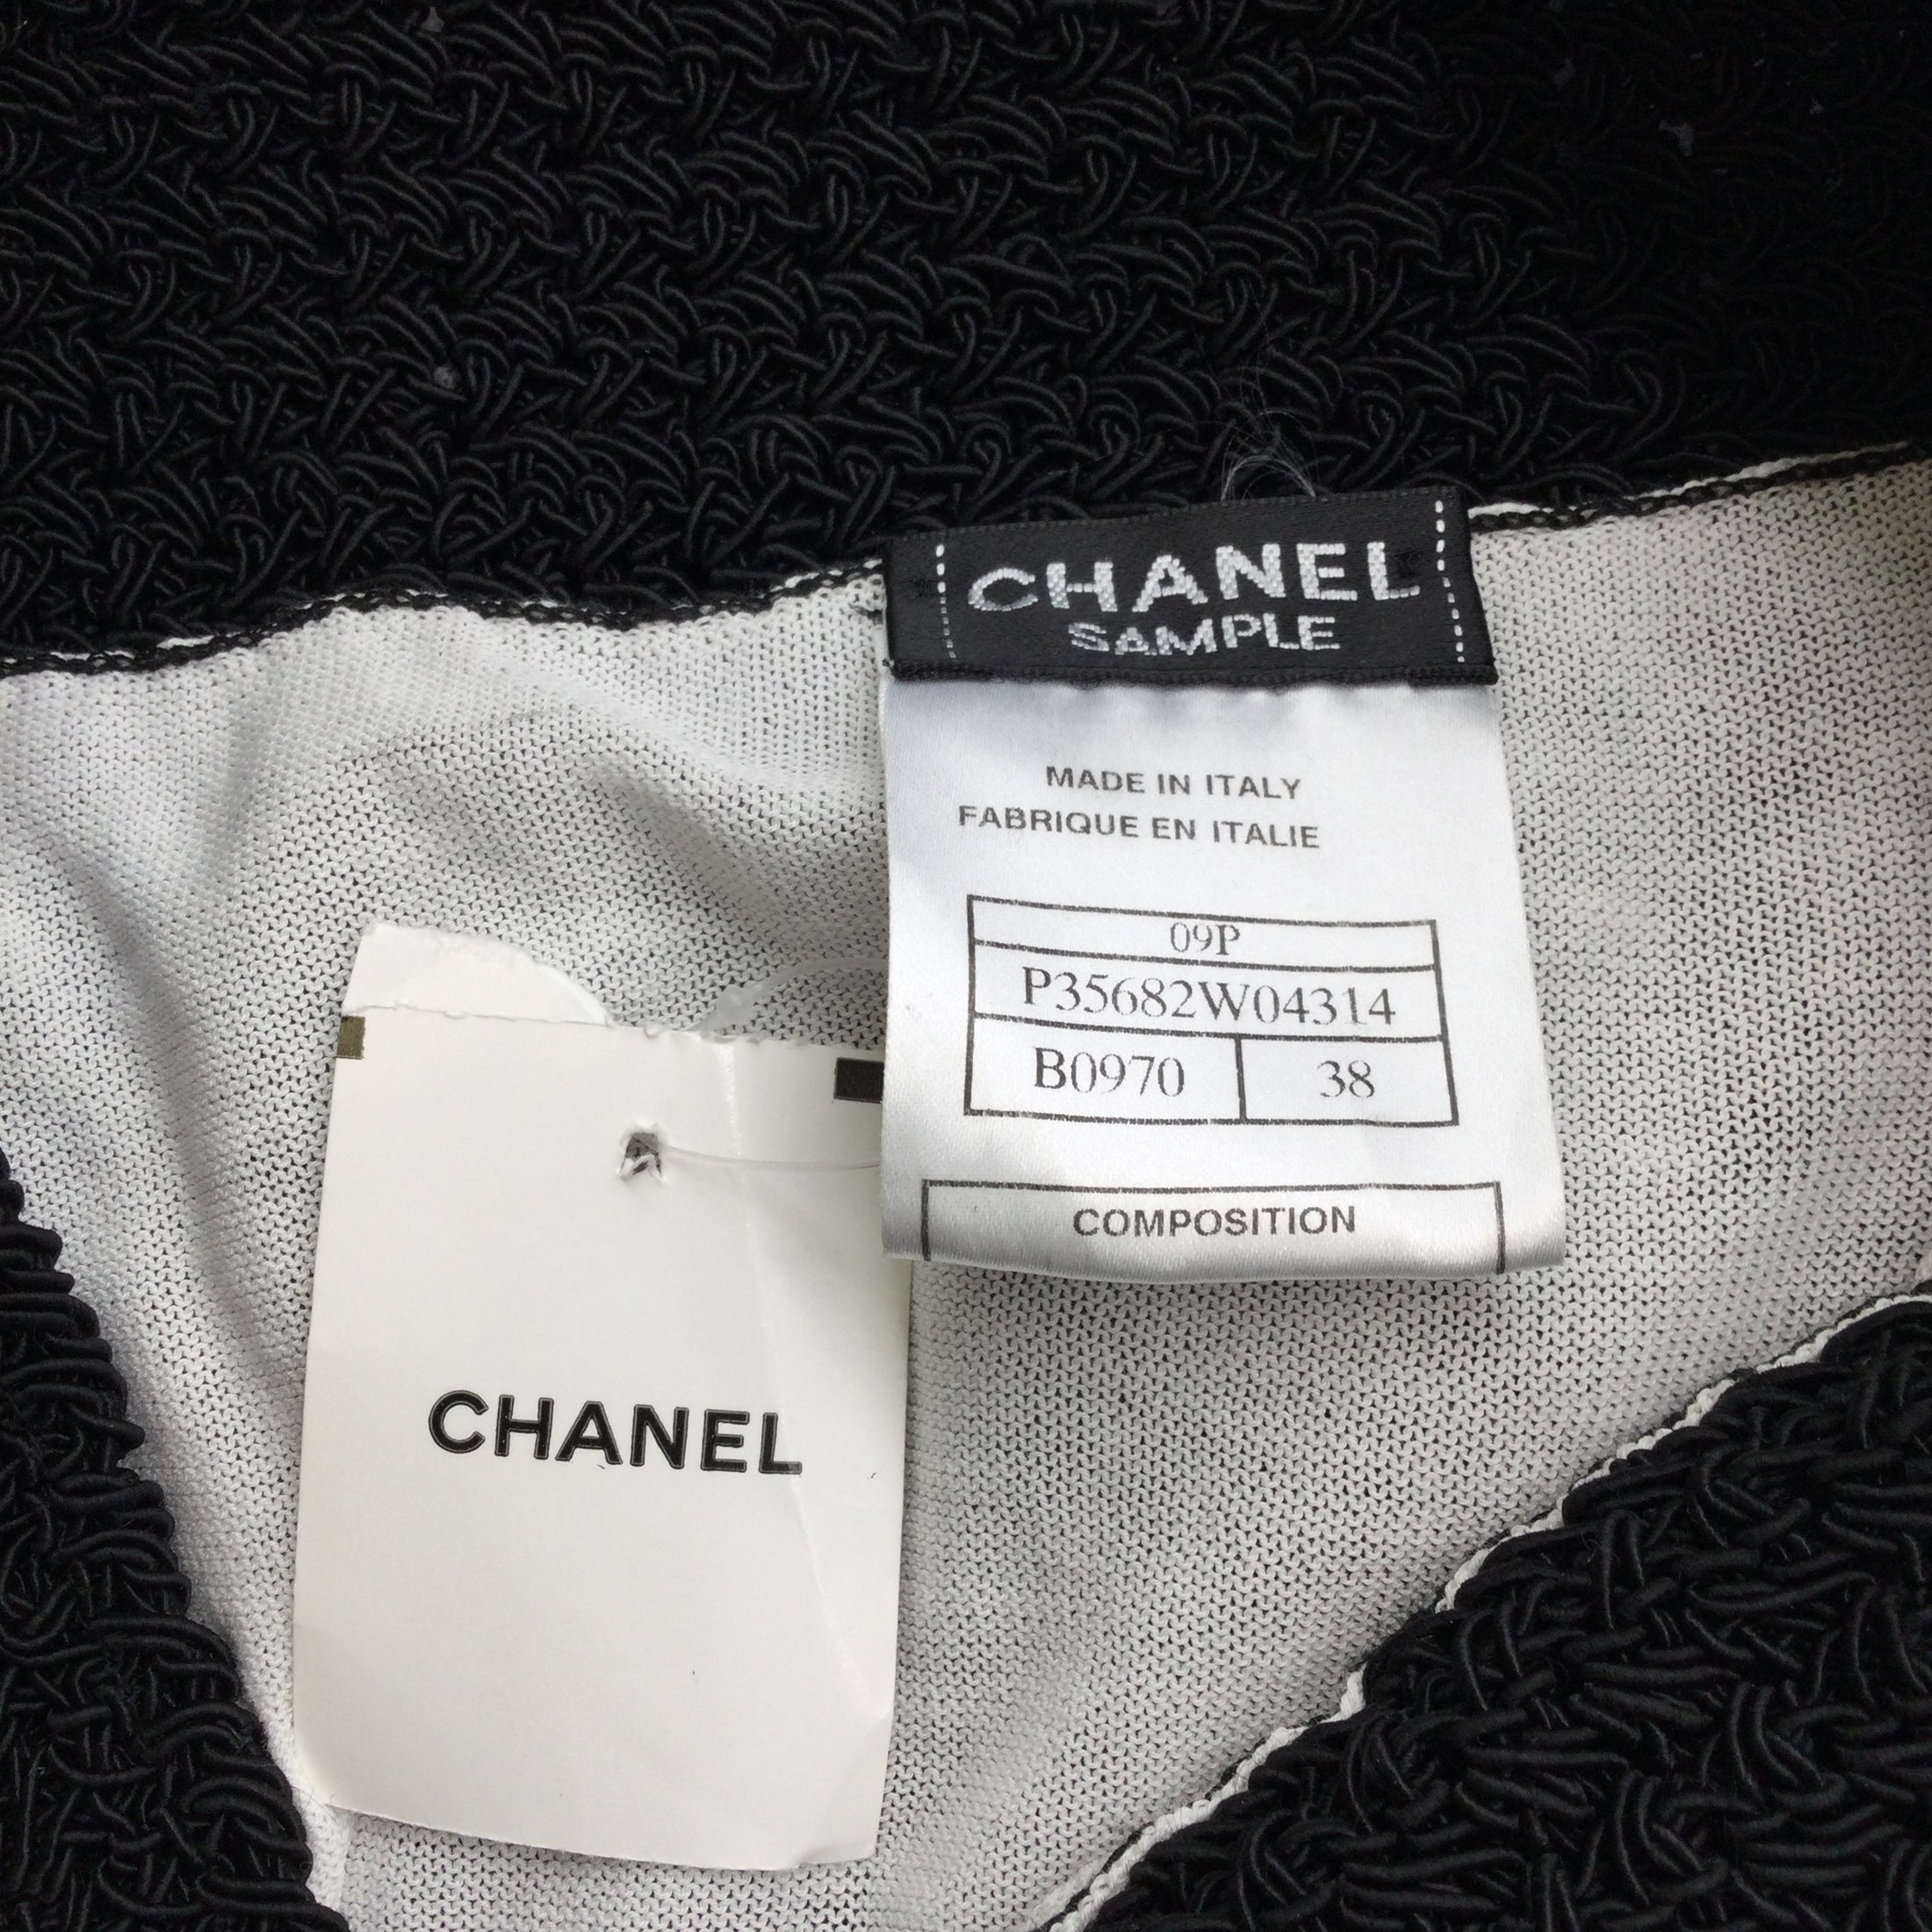 Chanel Black Woven Ribbon Skirt